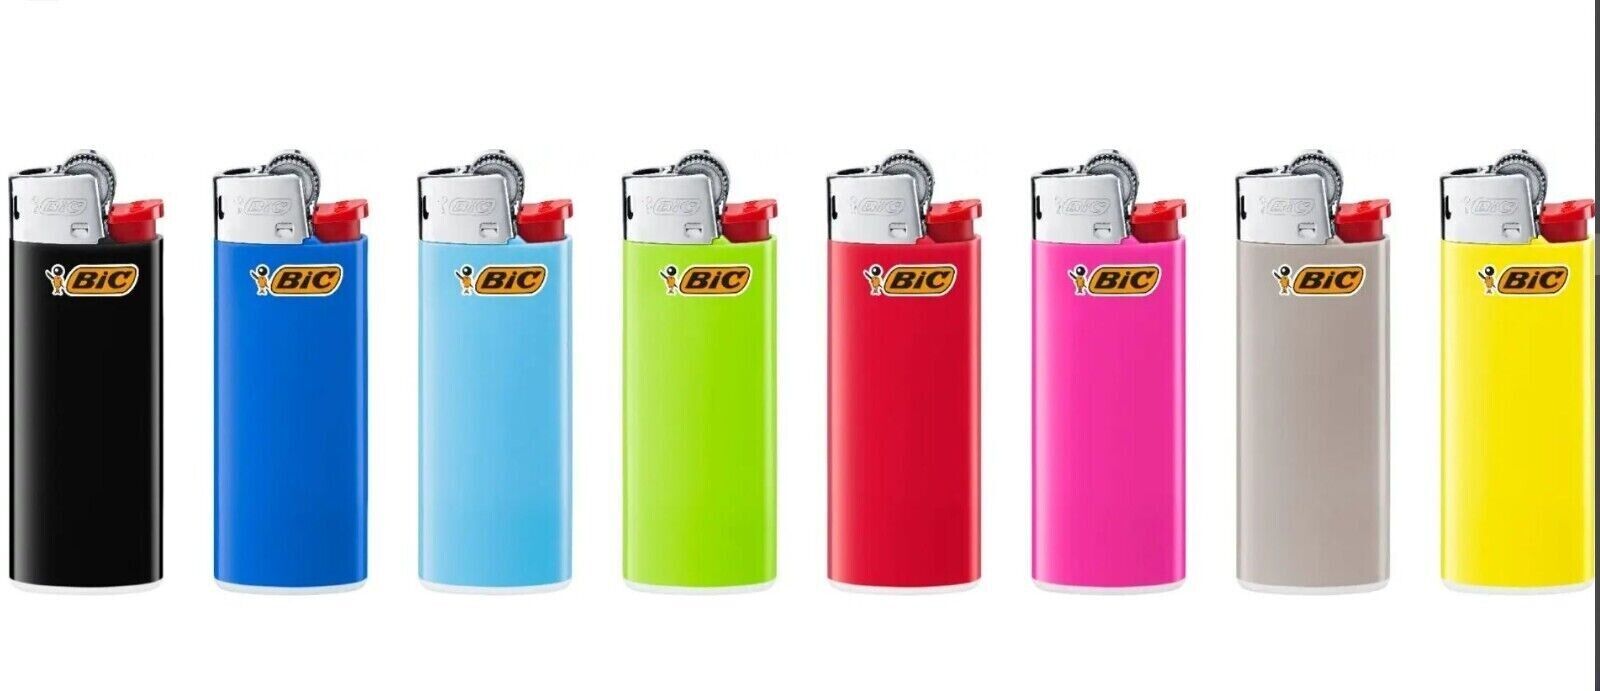 MIni BIC MINI Lighters, Fast Shipping, New Pack of 10